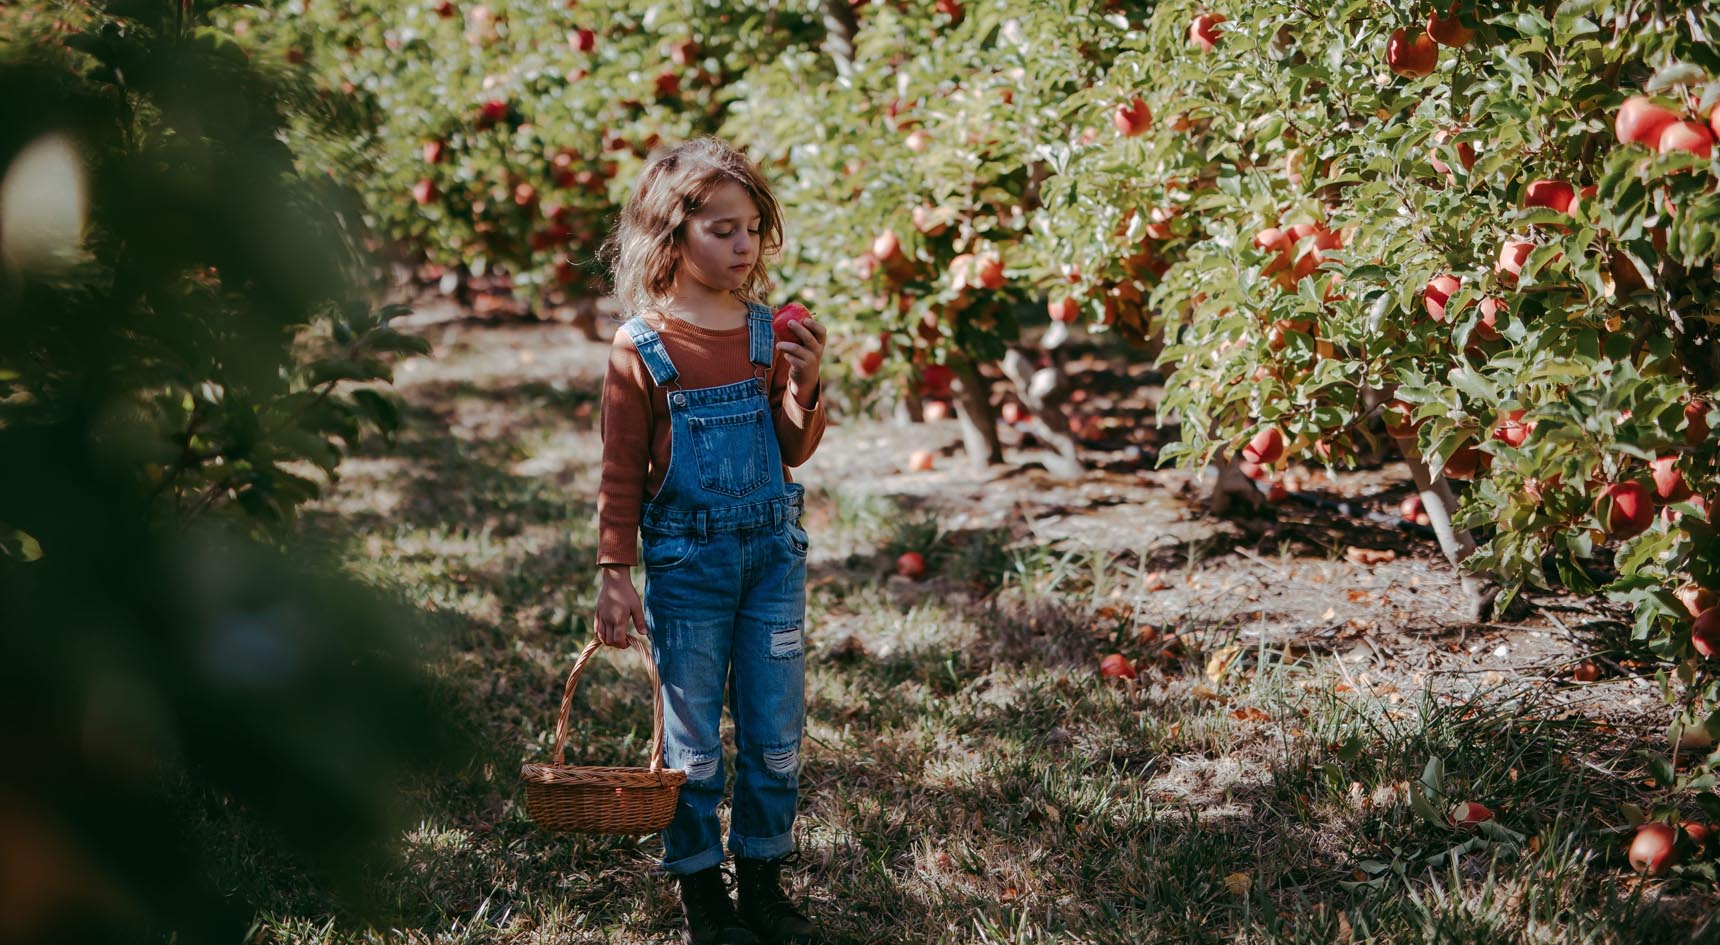 A girl walking through an apple orchard.